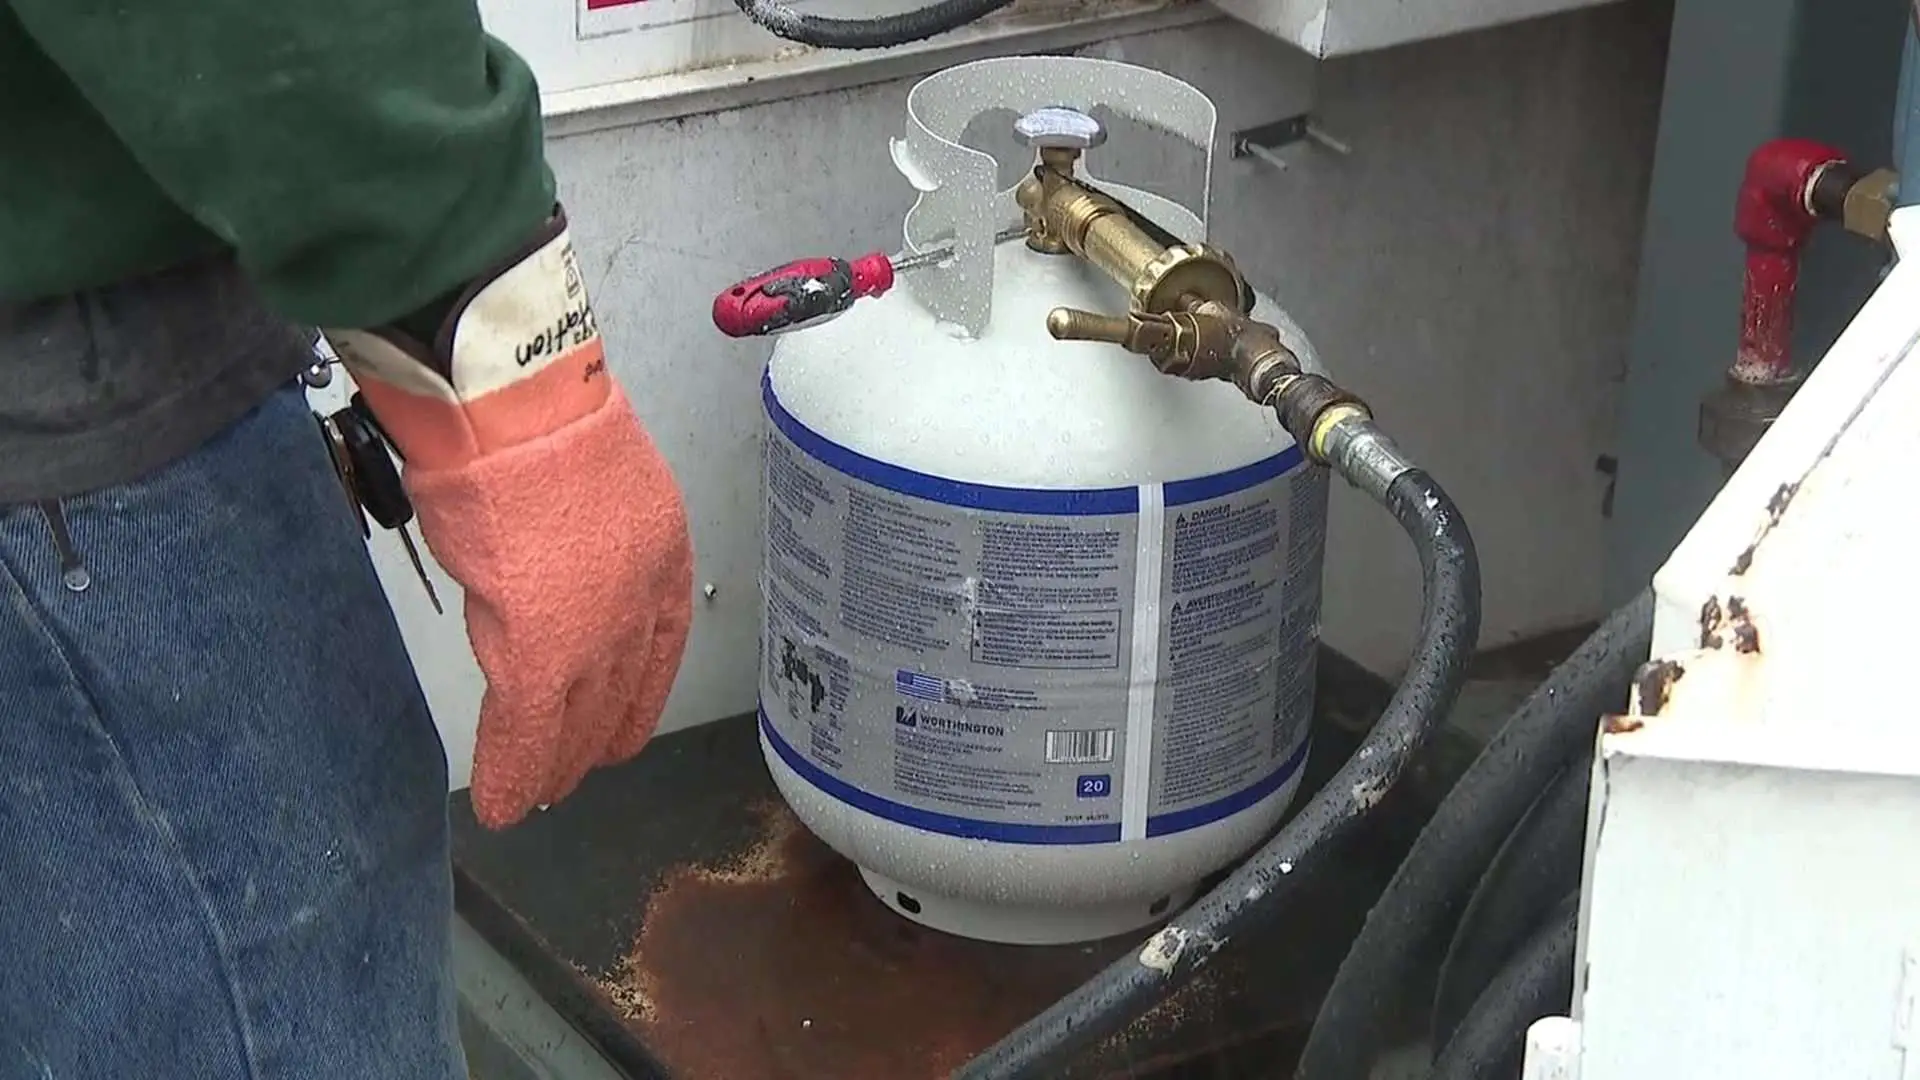 Business offering free propane tank refills